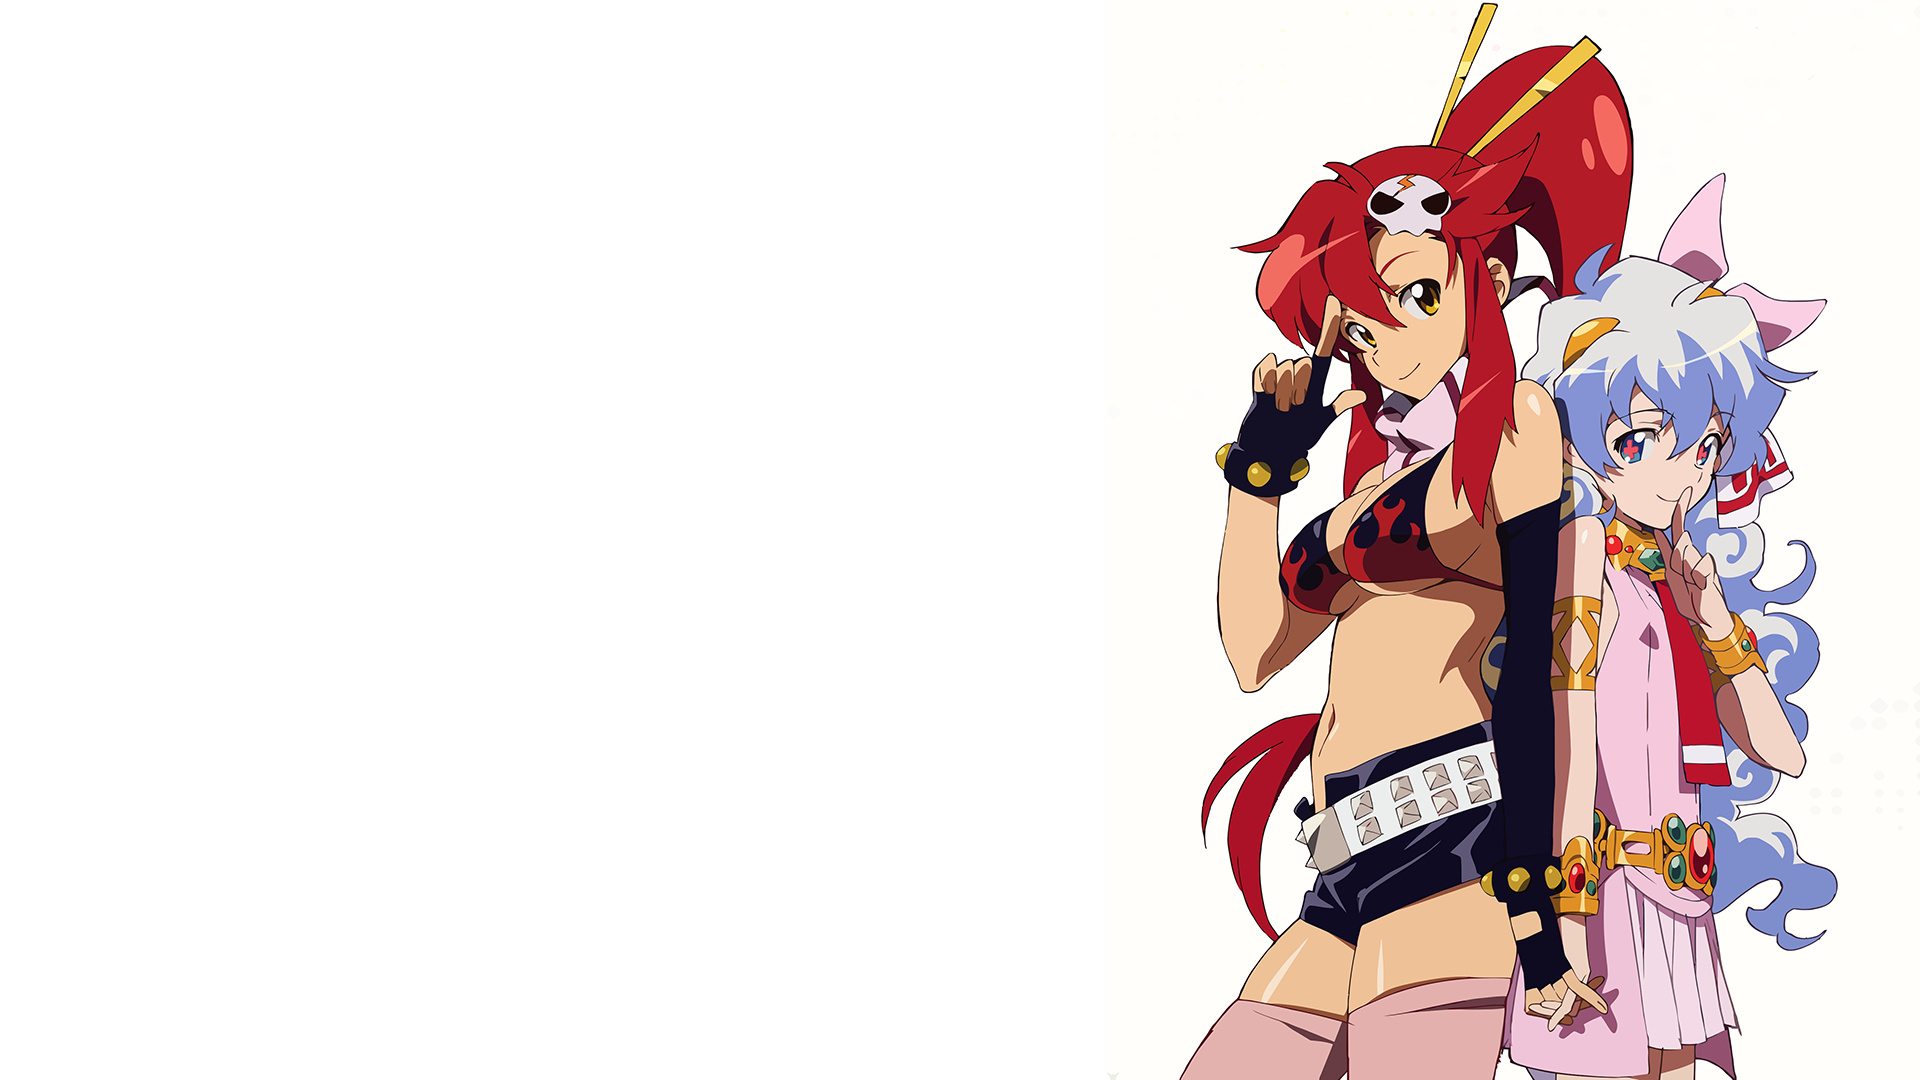 Nia from Gurren Lagann, Anime character, Redhead beauty, Artistic depiction, 1920x1080 Full HD Desktop